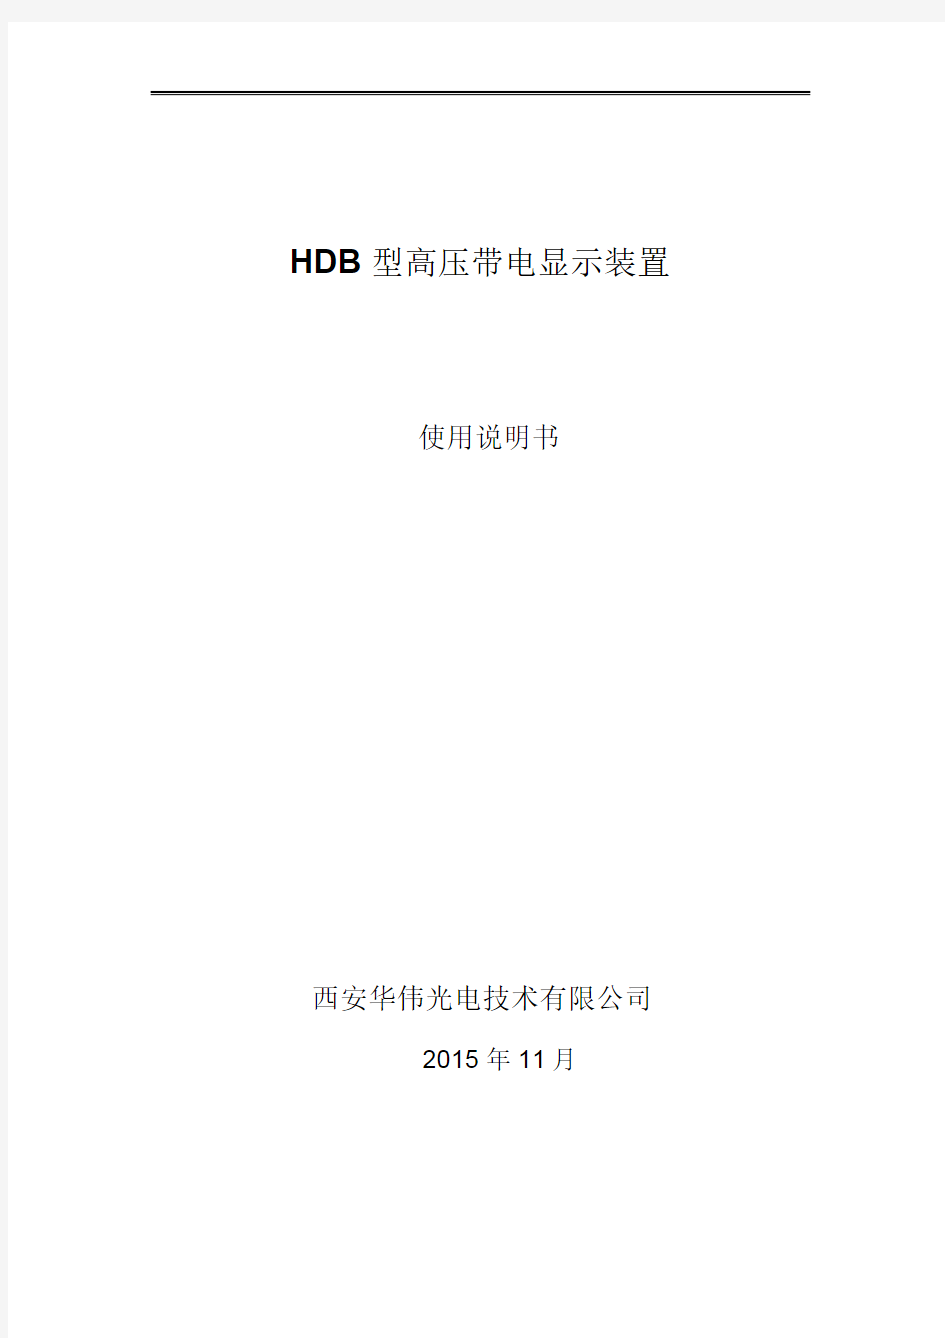 HW-HDB型高压带电显示器(35~550kV)GIS开关用安装使用说明书.pdf